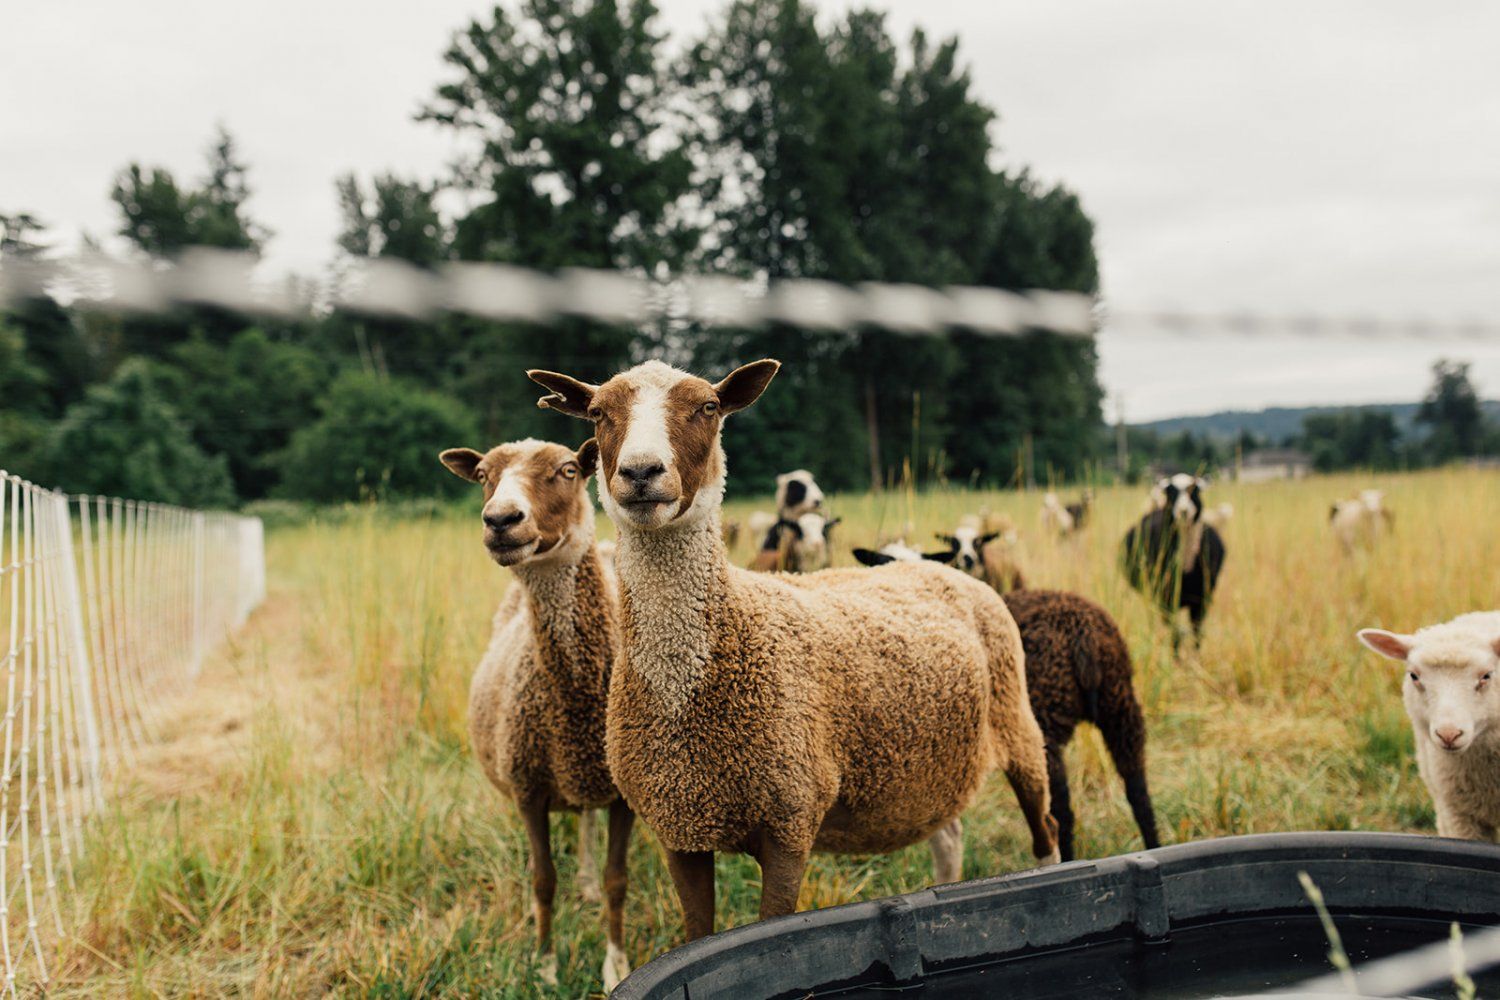 Next Happening: Farm Happenings for July 29, 2021: Hot Sheep Summer